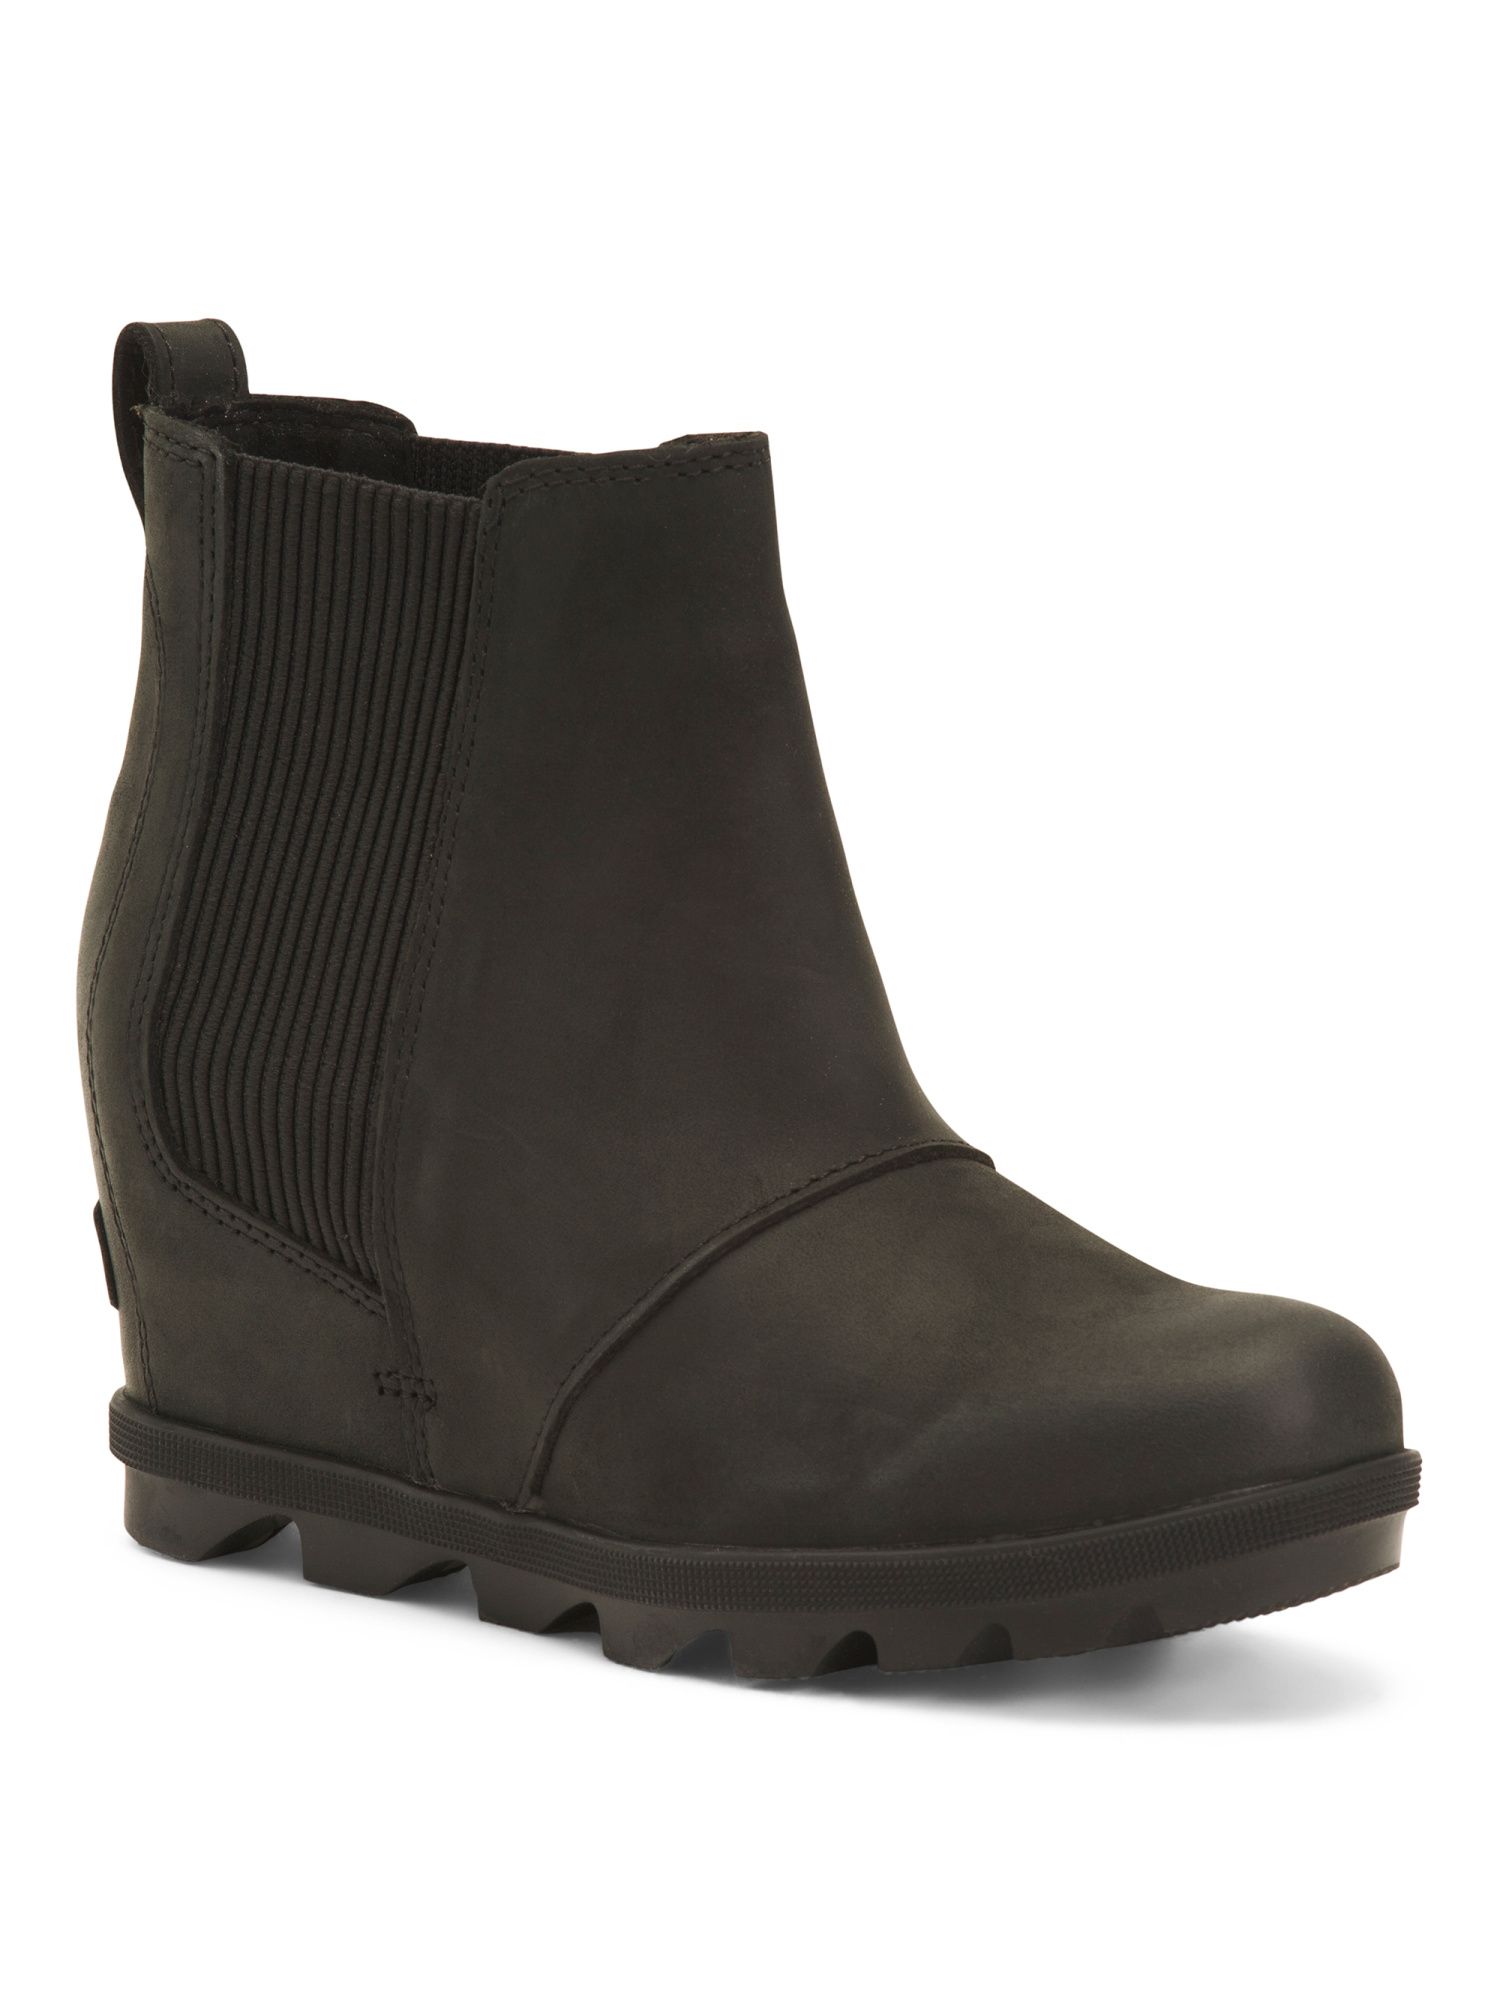 Waterproof Full Grain Leather Wedge Boots | TJ Maxx